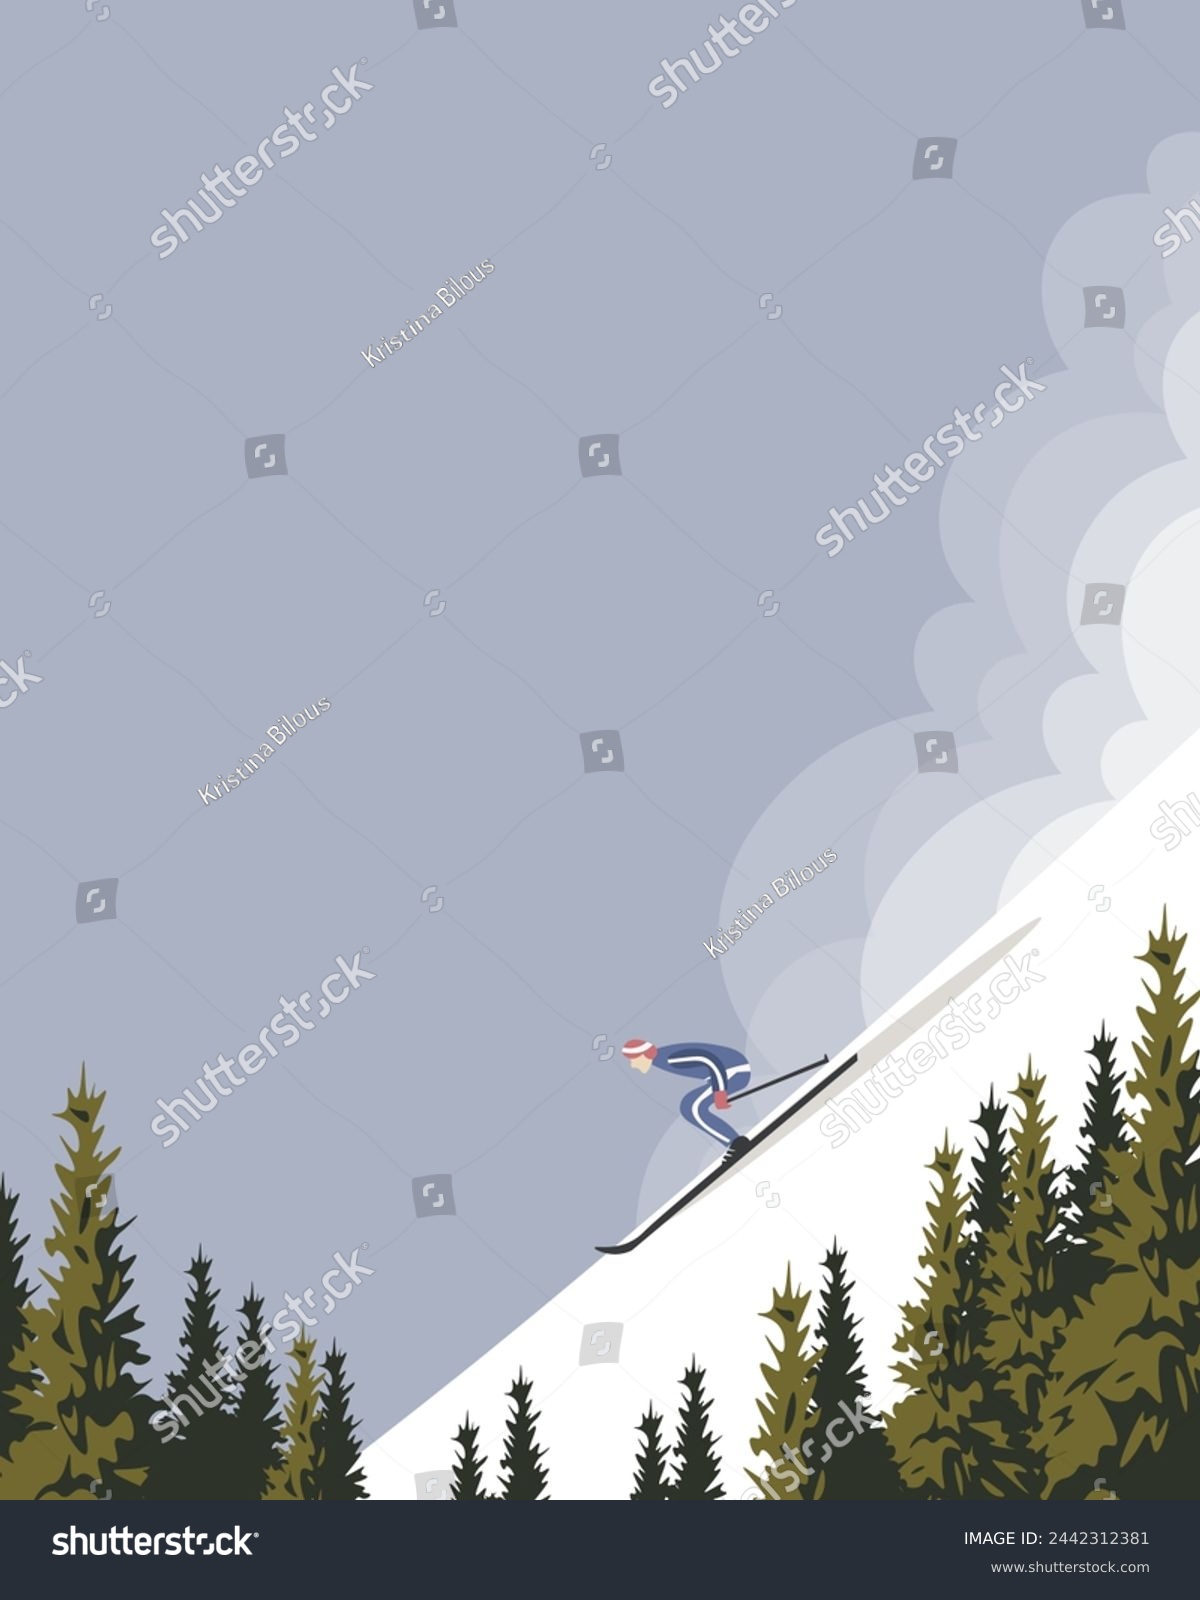 SVG of Vector illustration. Snowboarder, winter resort, mountains. Poster, banner, postcard, cover design. Tourism, winter holidays. Trips. svg